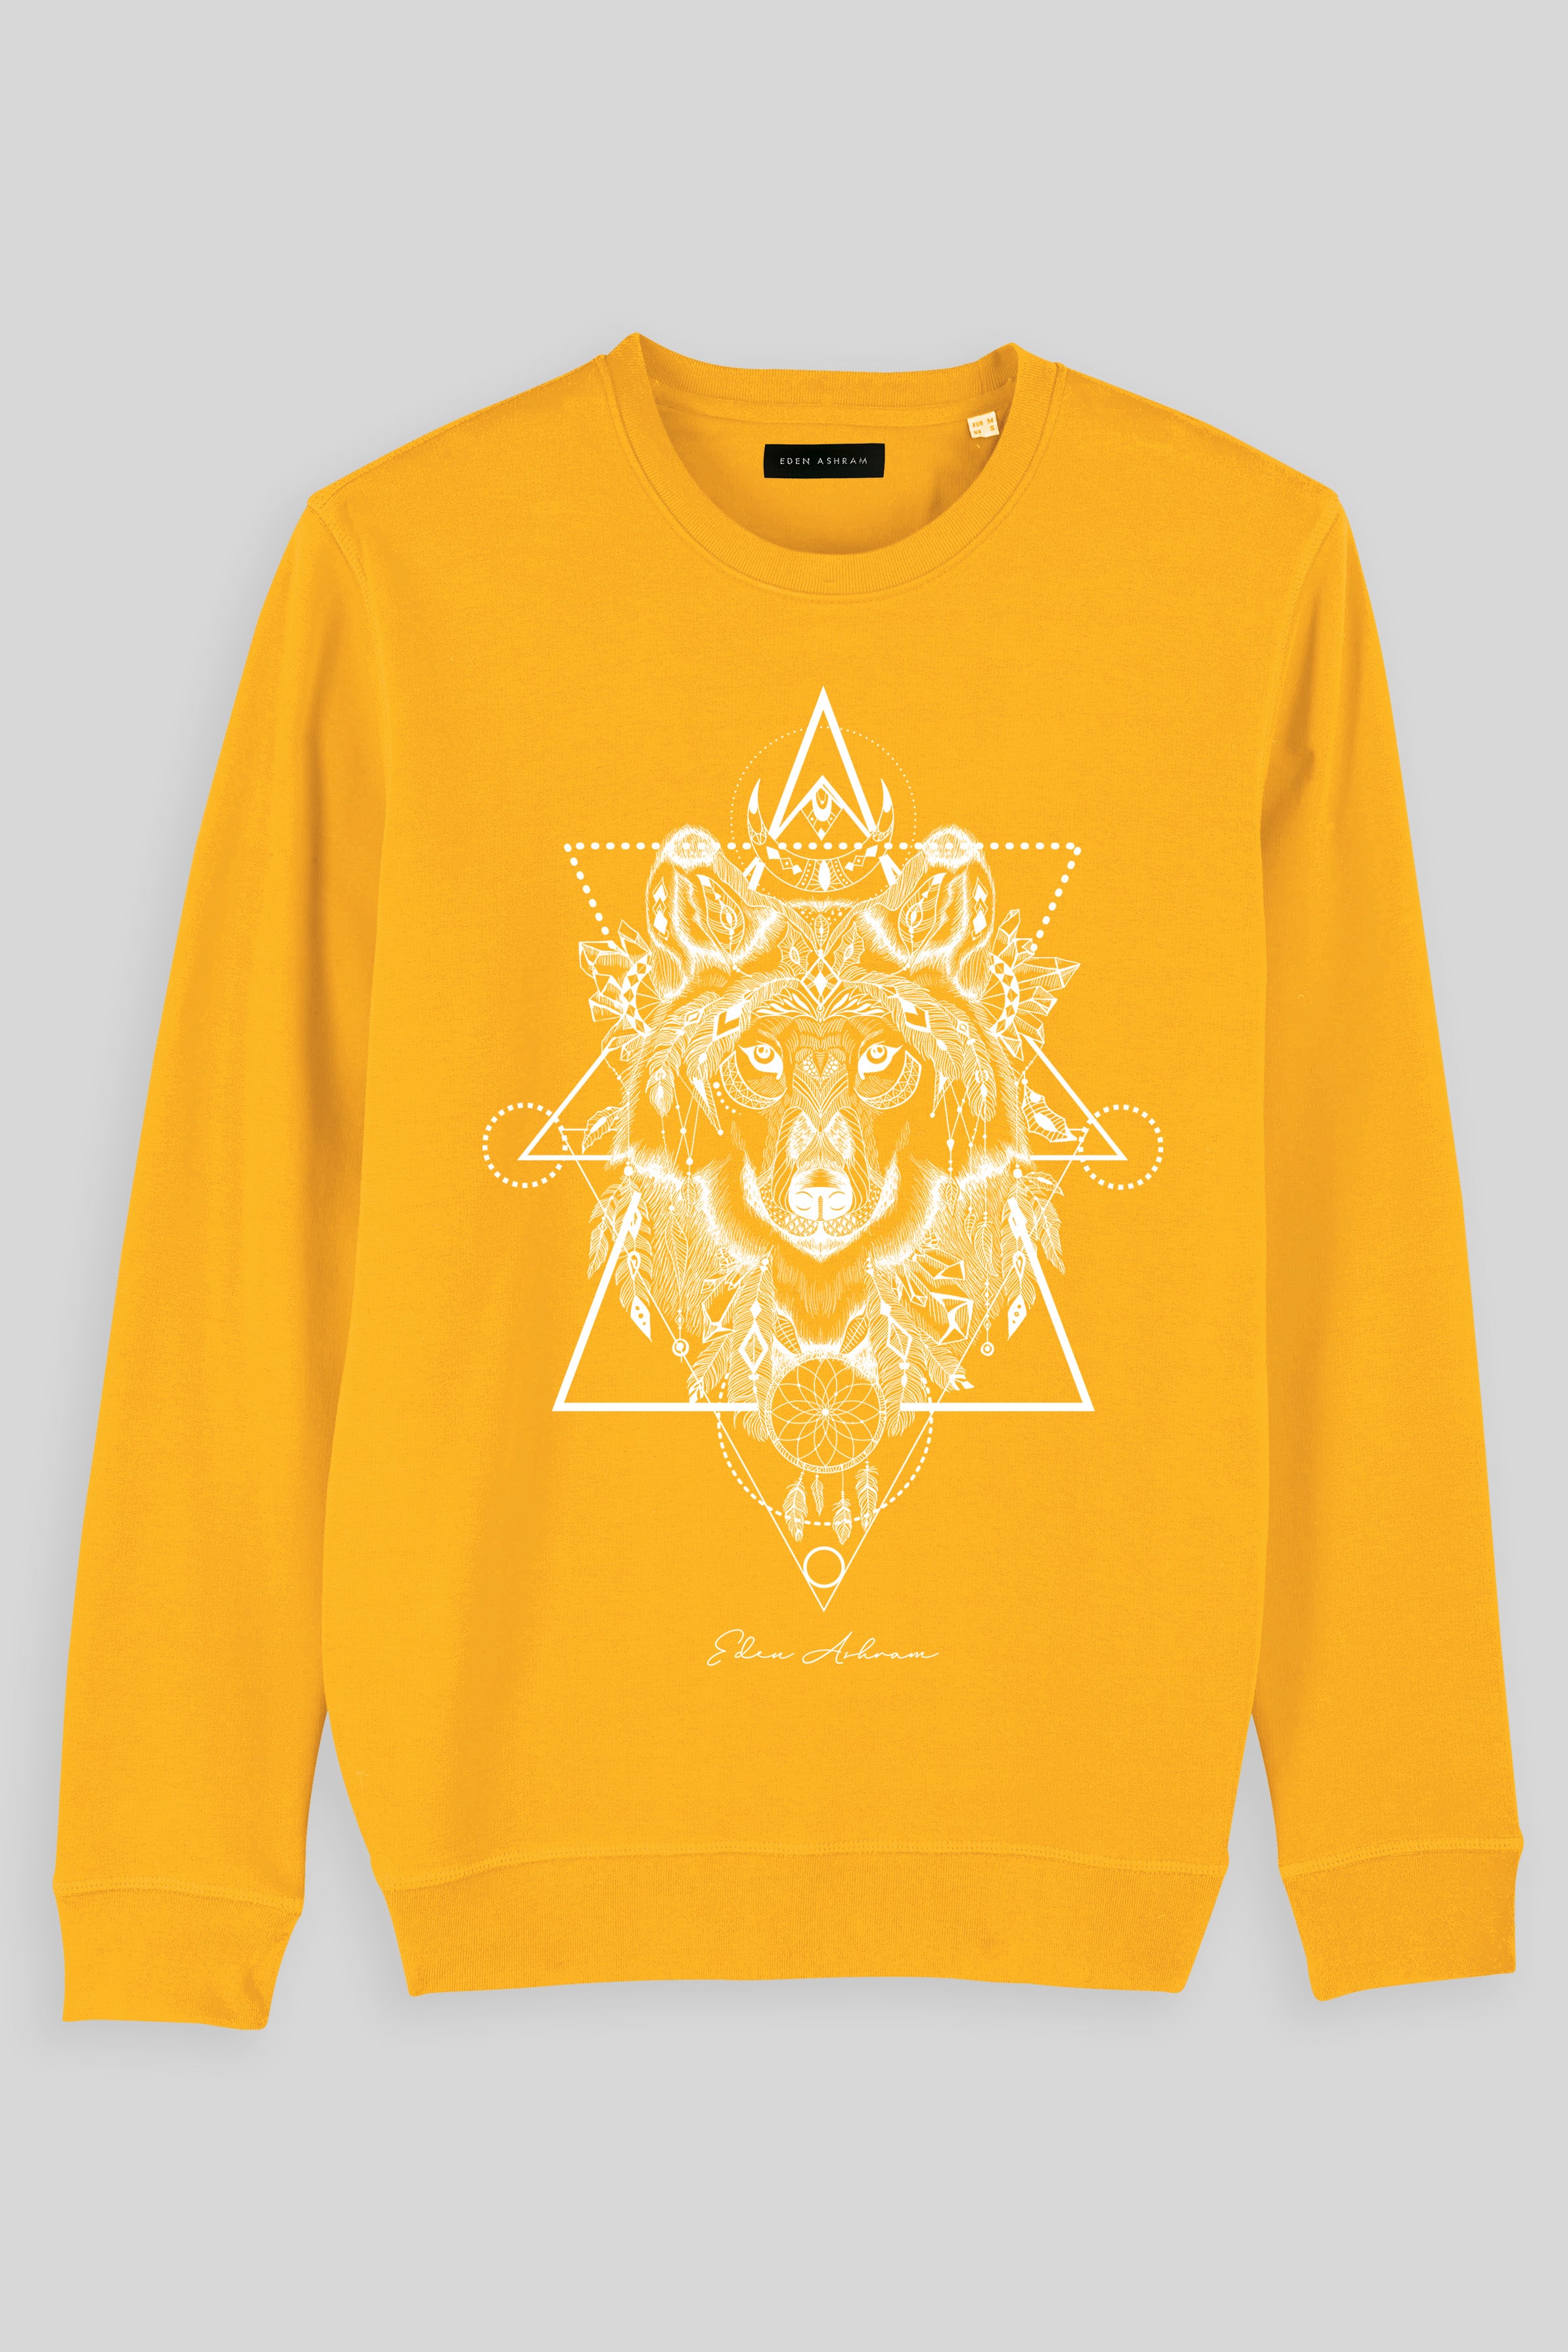 Eden Ashram Mystic Wolf Premium Crew Neck Sweatshirt Spectra Yellow